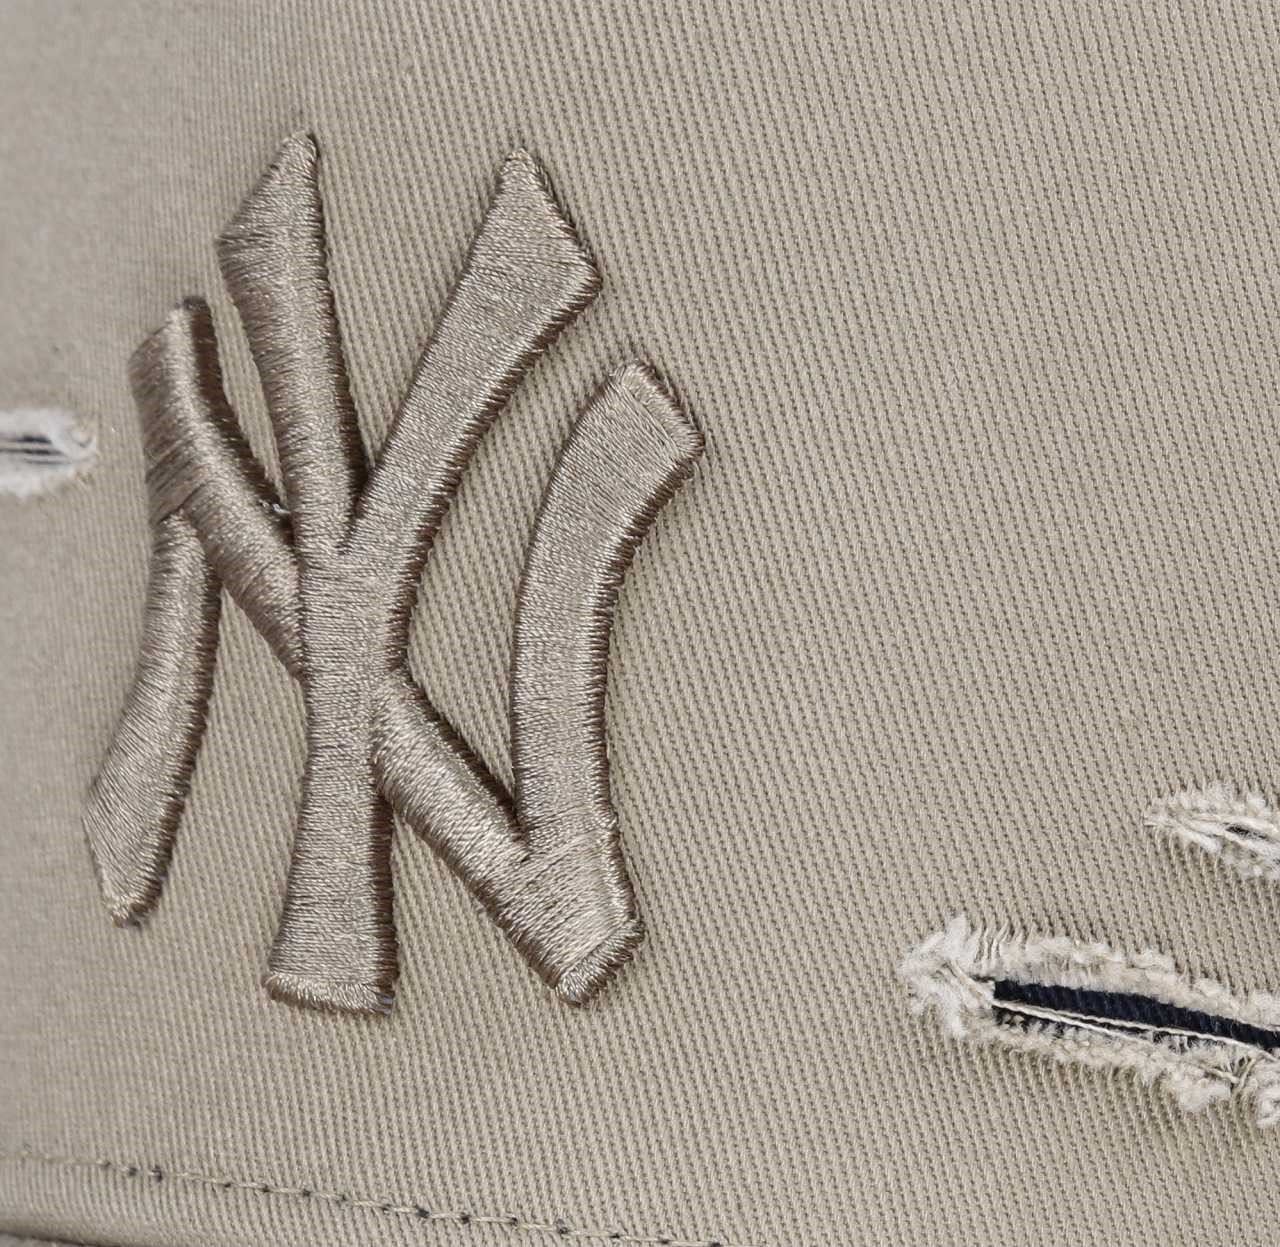 New York Yankees Distressed A-Frame Adjustable Trucker Cap New Era